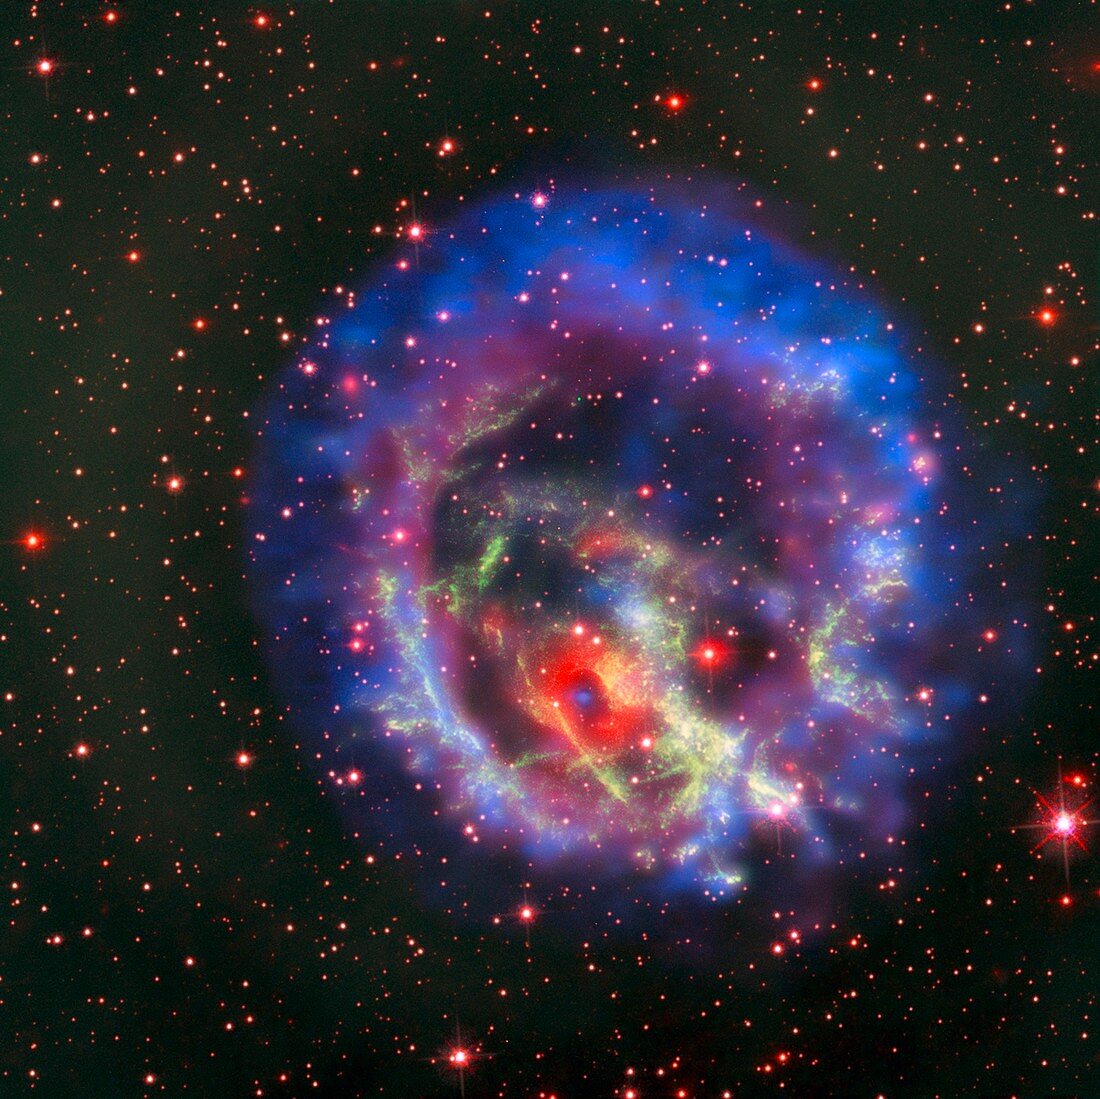 Supernova remnant and neutron star, composite image